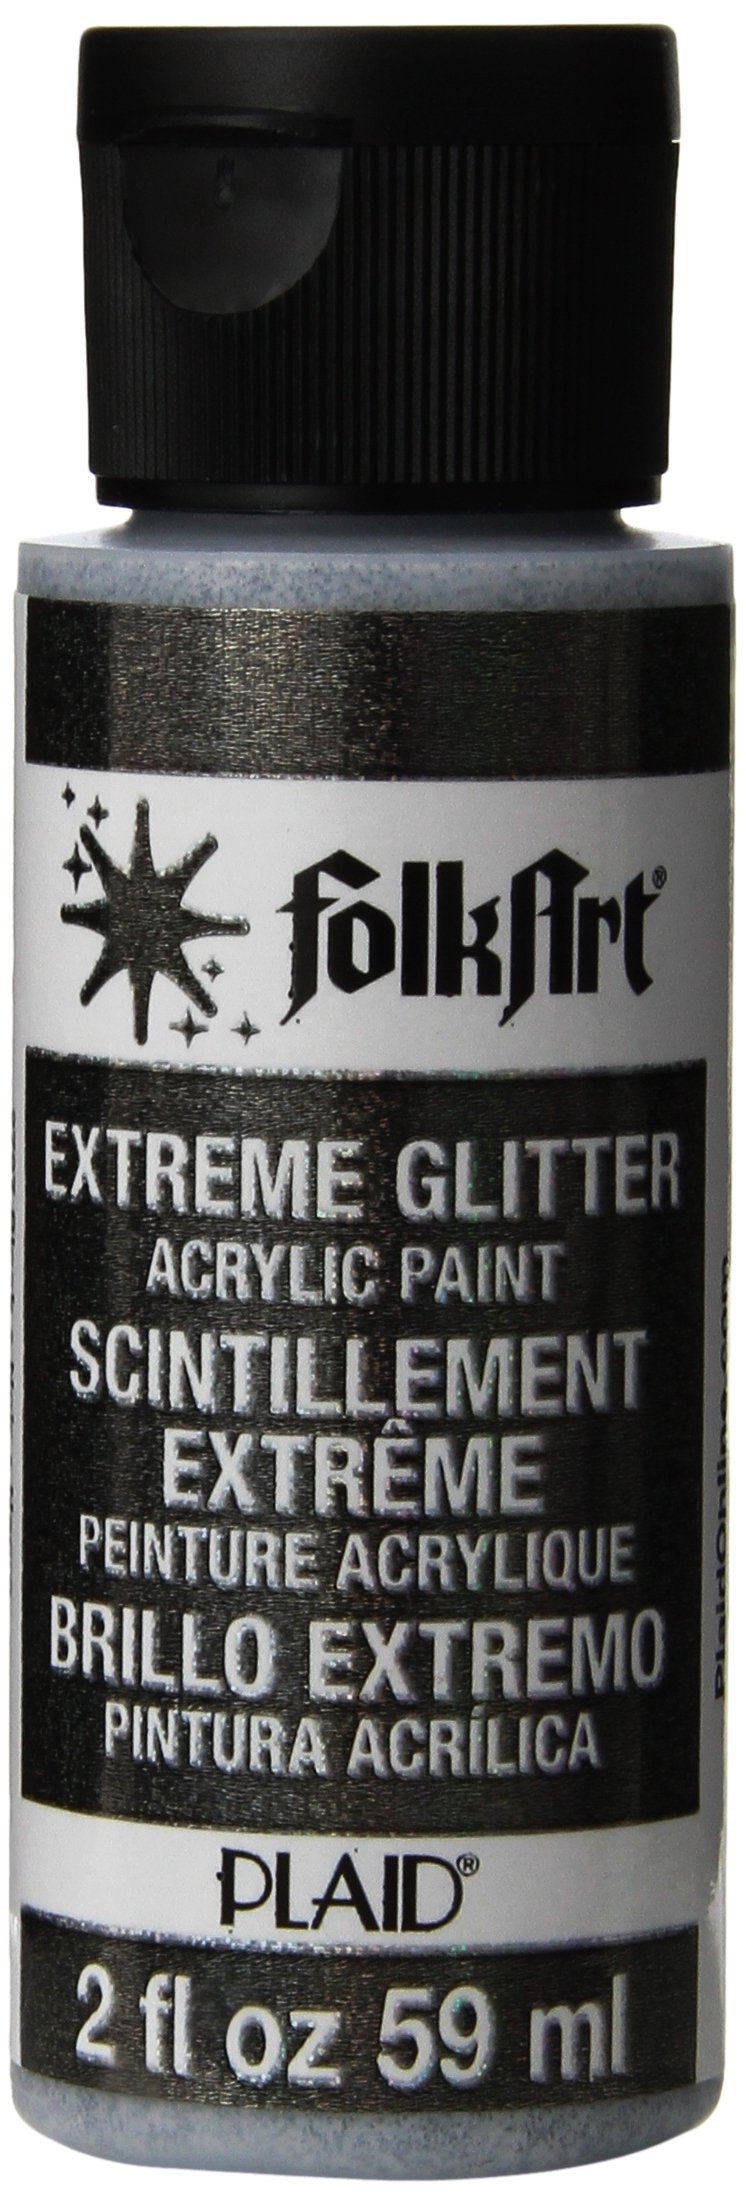 FolkArt Extreme Glitter Acrylic Paint in Assorted Colors (2 oz), 2797, Black - NewNest Australia